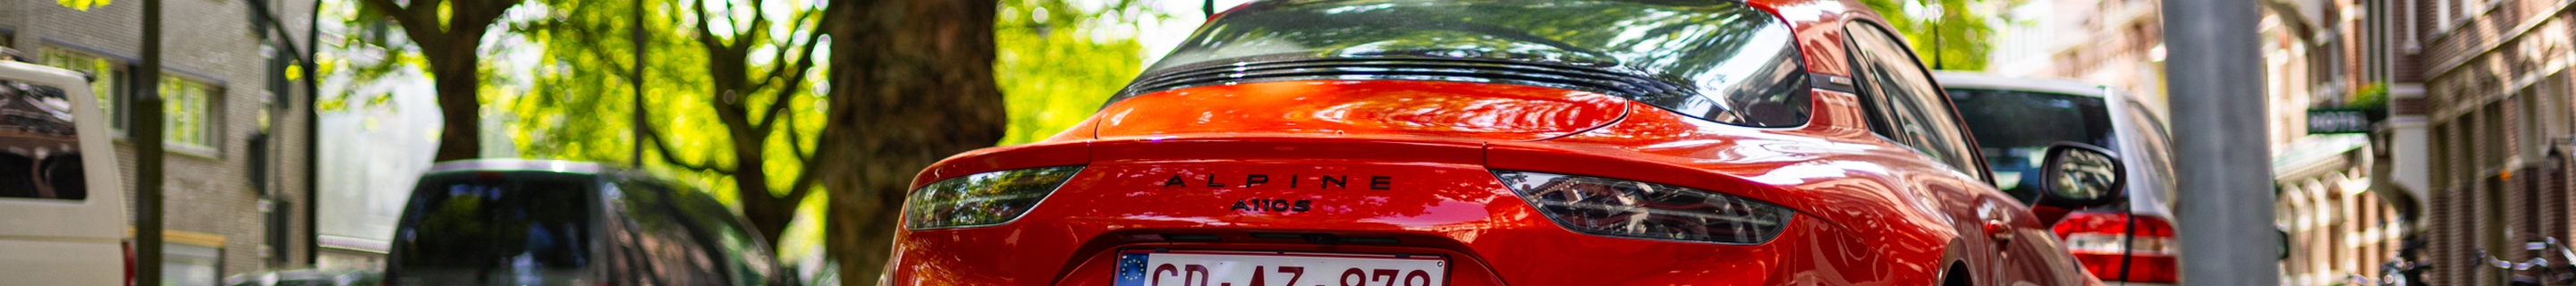 Alpine A110 S 2022